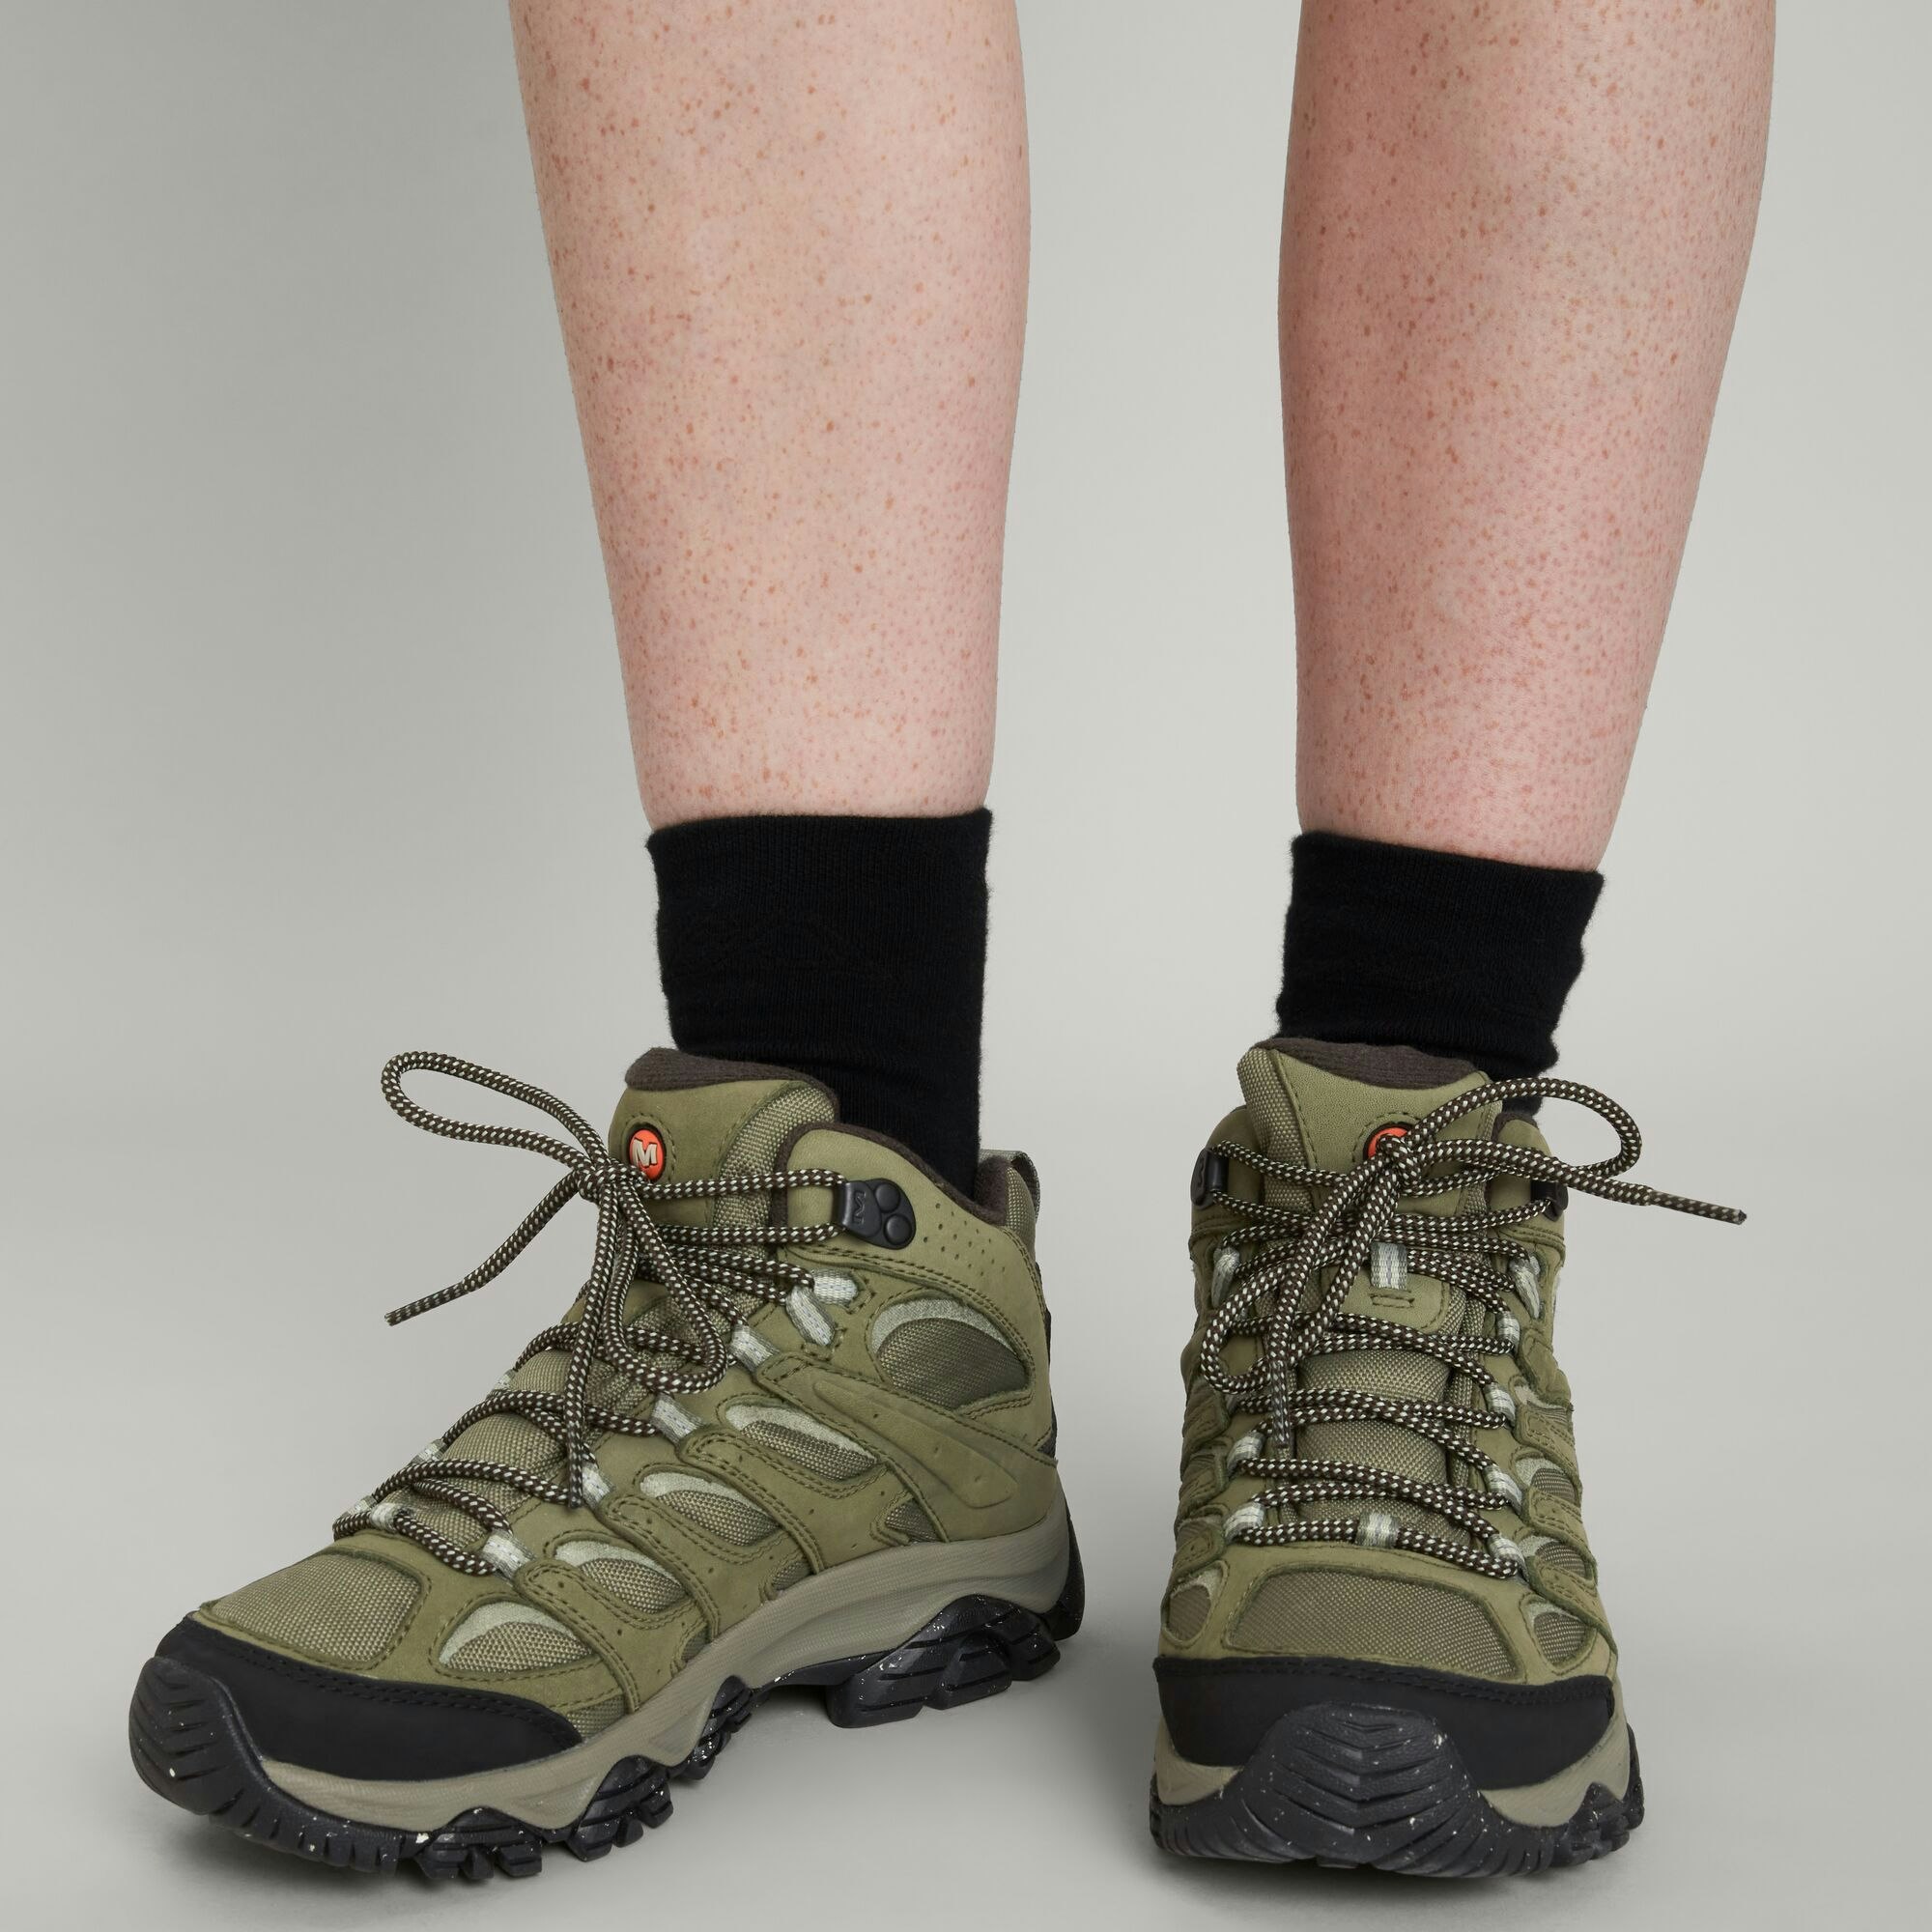 Merrell Moab Mid Gore-Tex Waterproof Hiking Boots | Kathmandu NZ